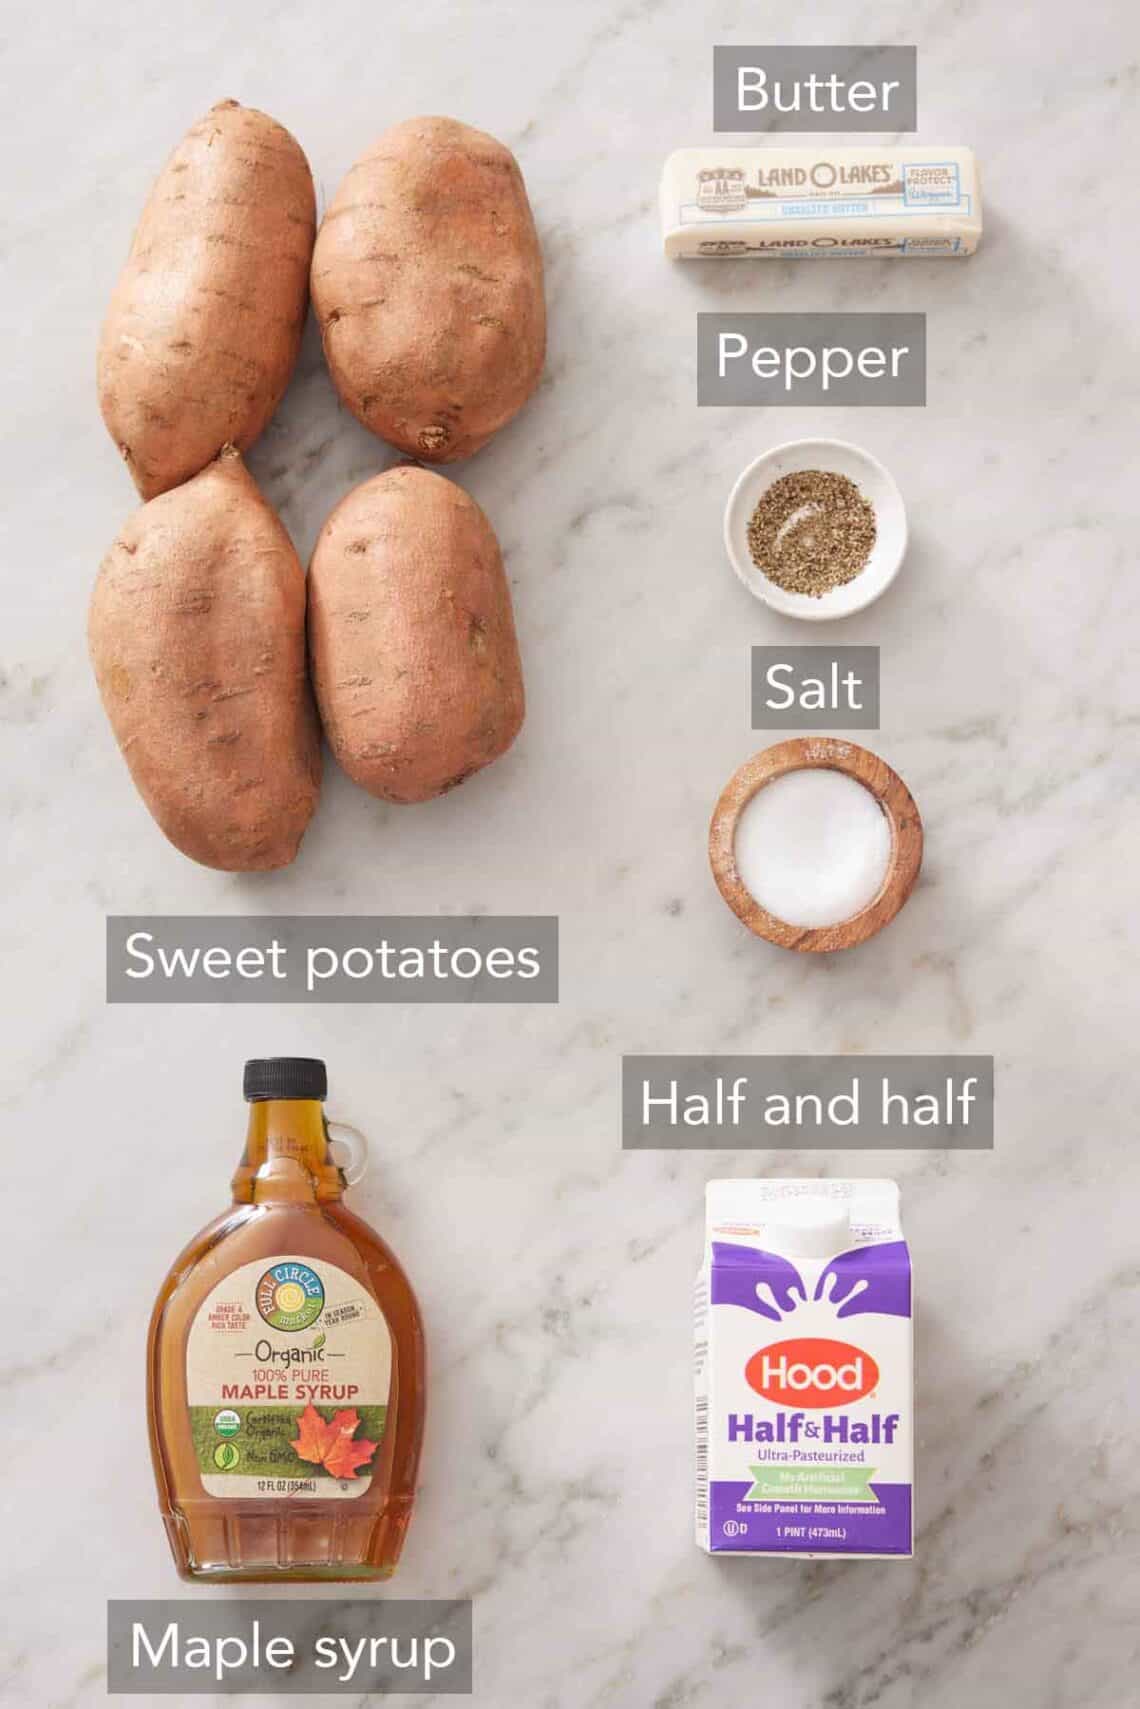 Ingredients needed to make mashed sweet potatoes.